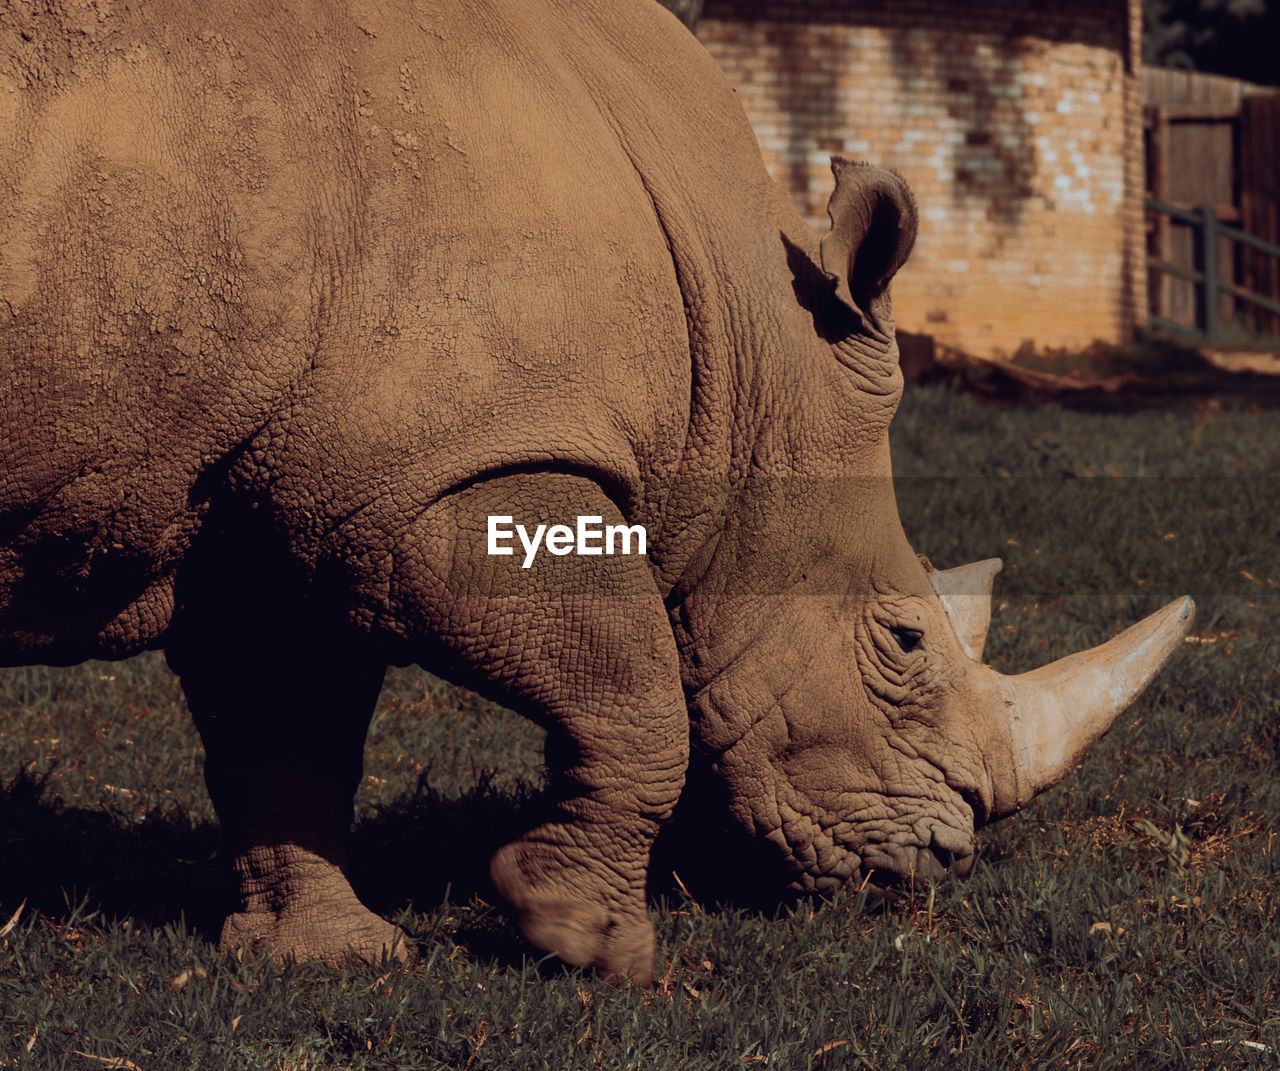 Save our rhinos